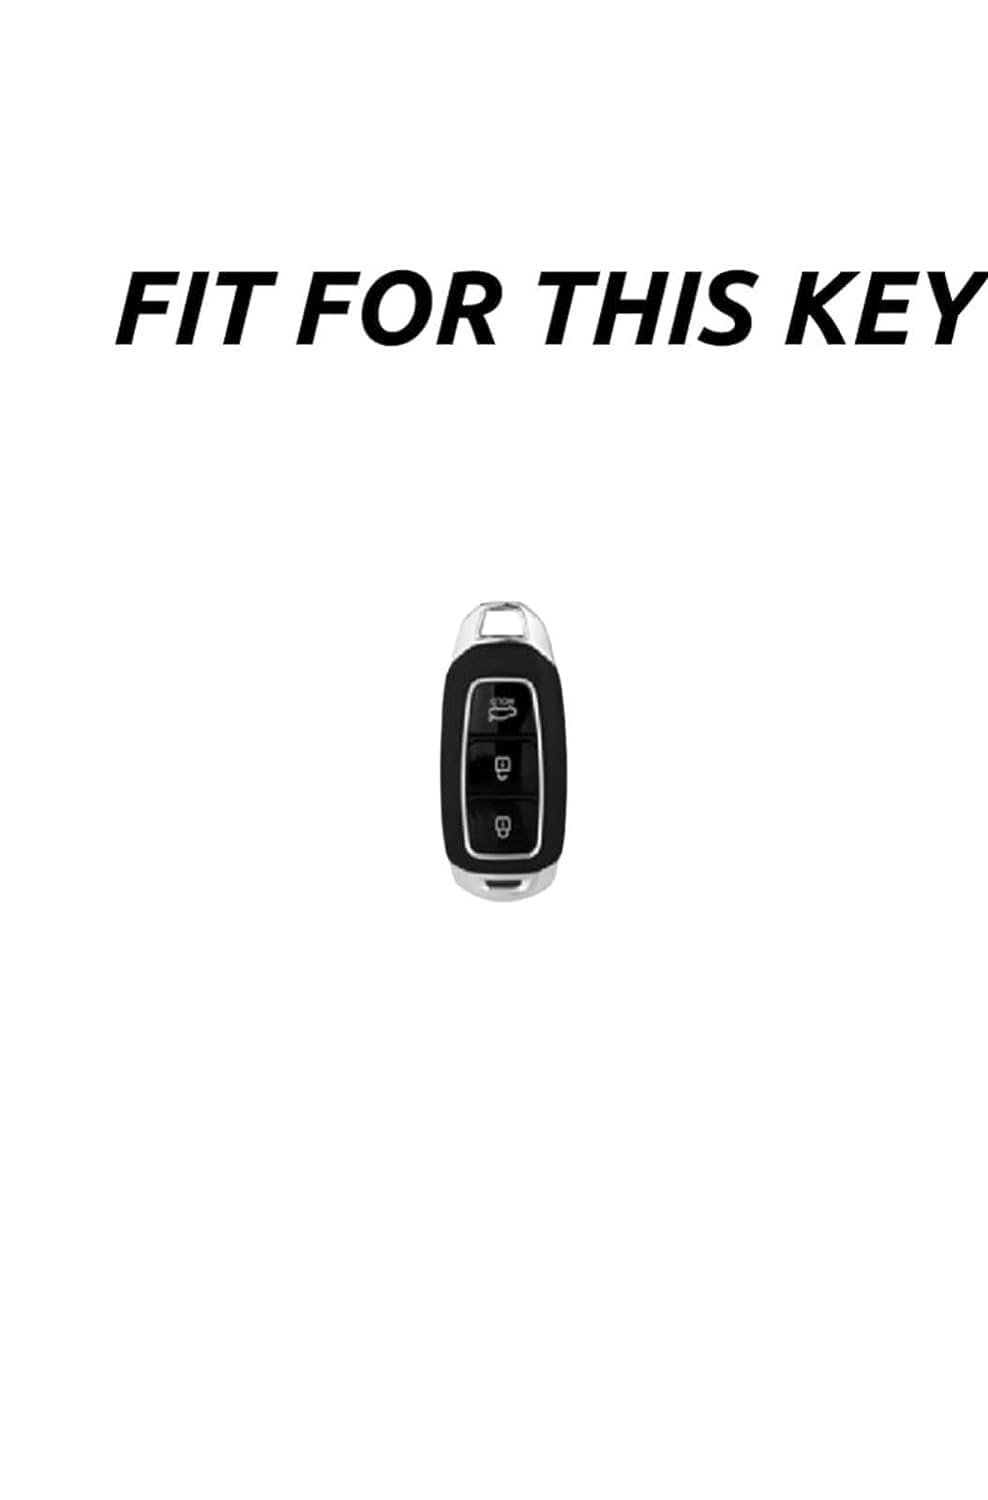 TPU Car Key Cover Compatible with Mahindra XUV-500 Flip Key (Gold/Black) Image 